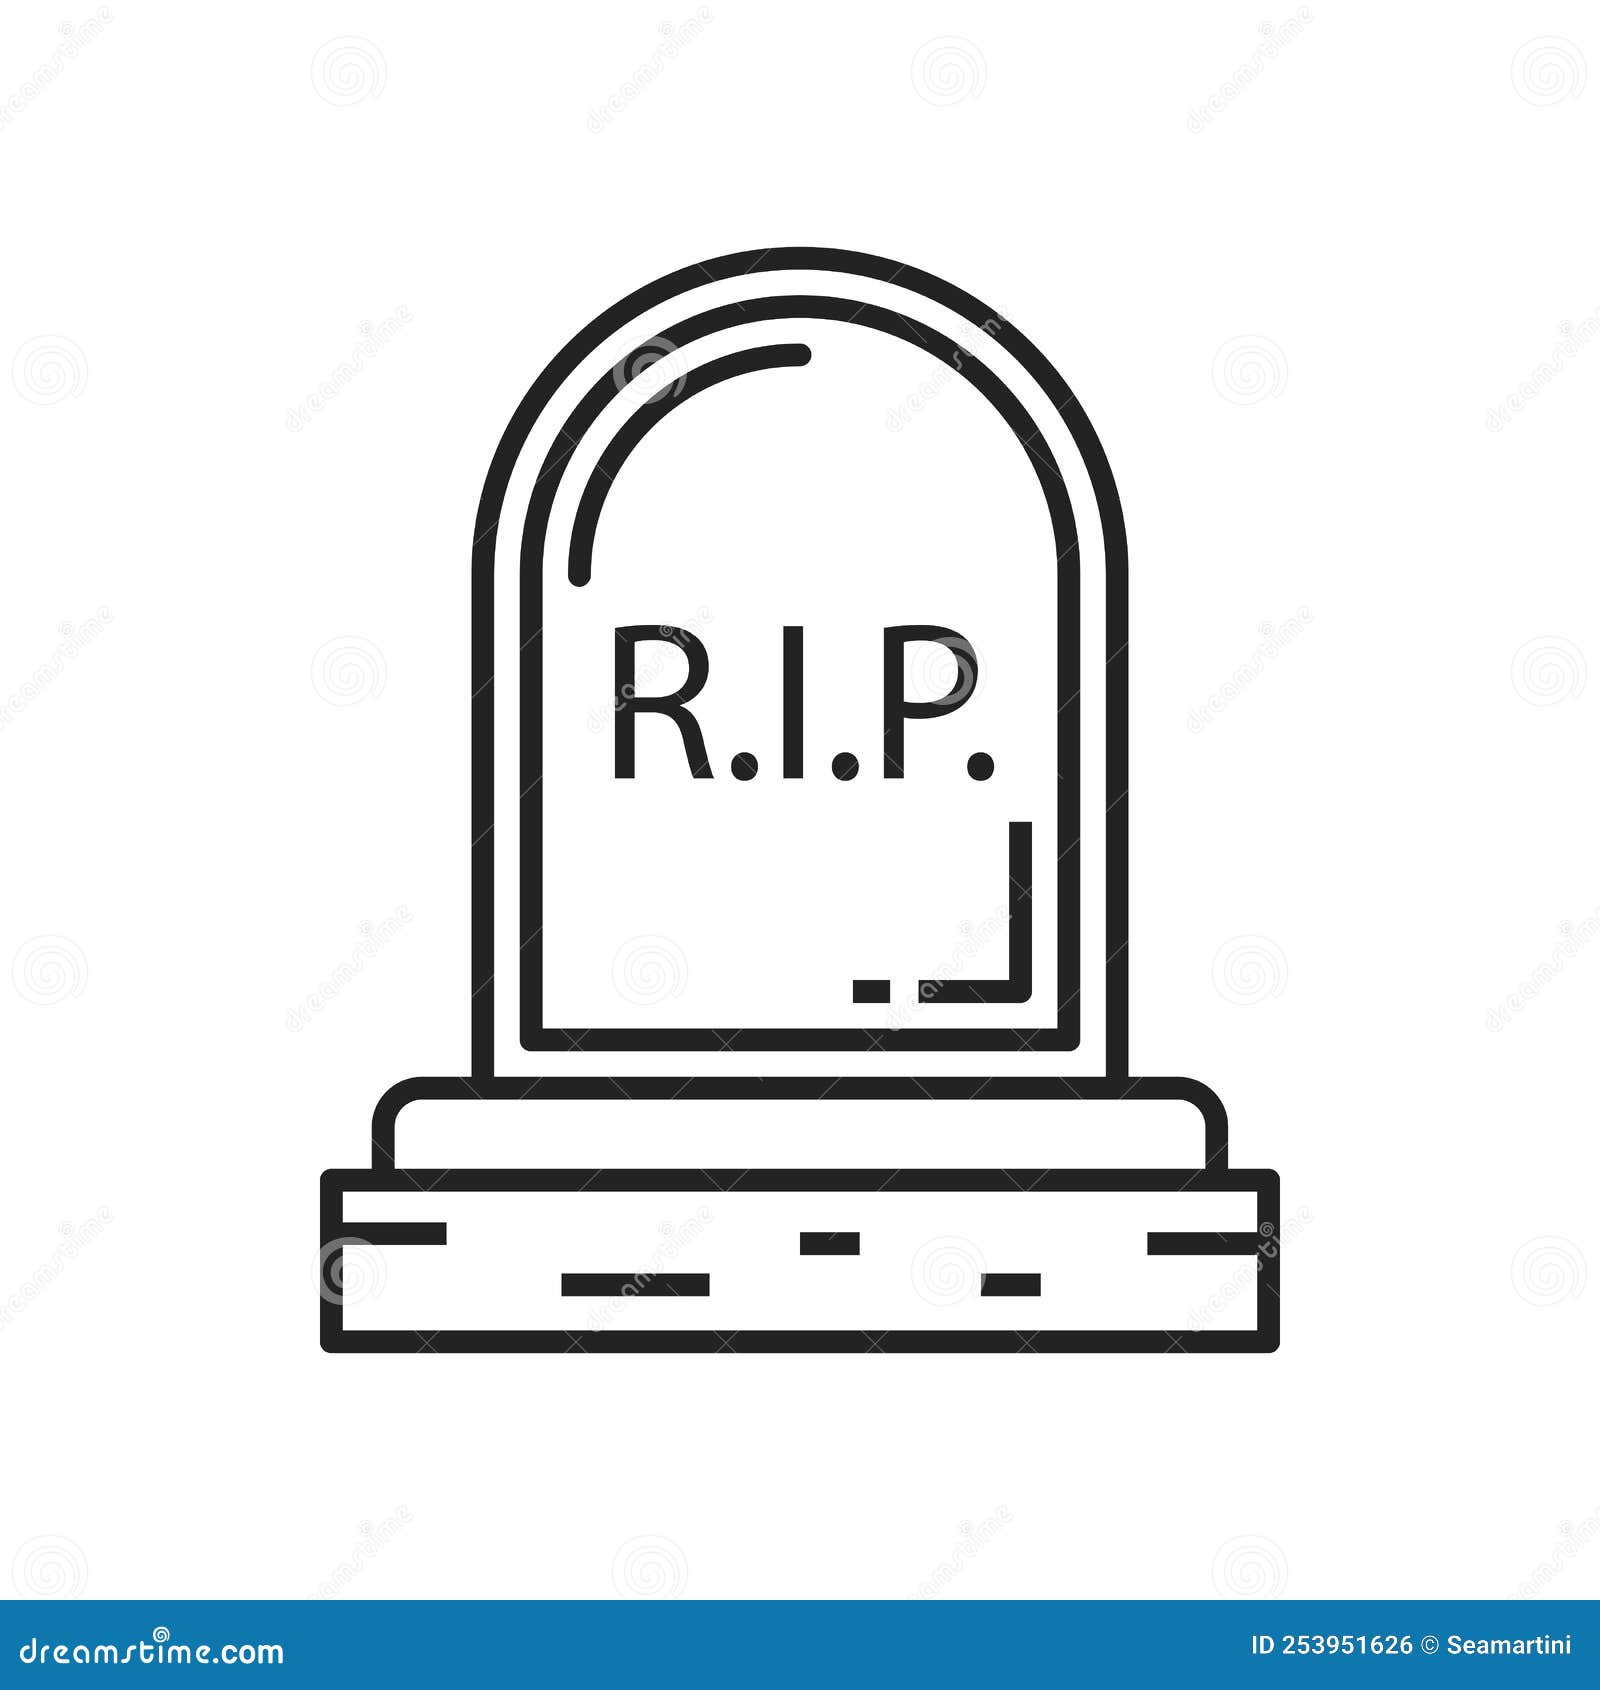 Cemetery, gravestone, graveyard, rip, tombstone icon - Free download